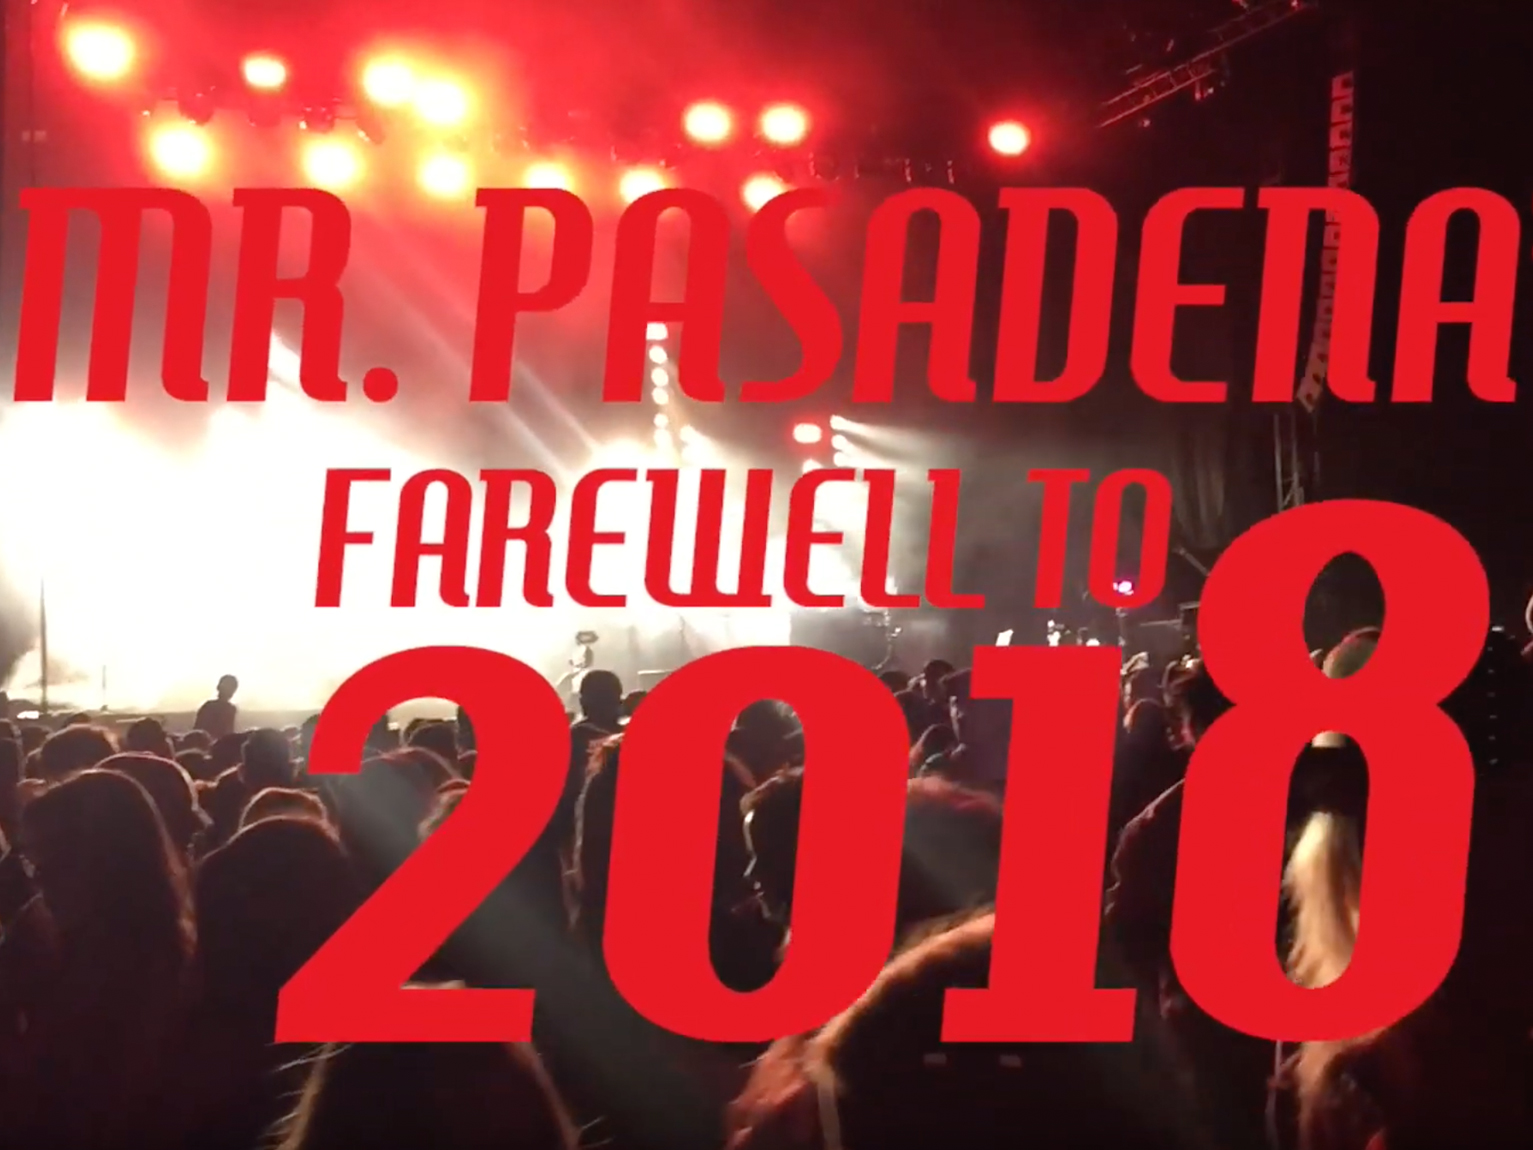 Mr. Pasadena's Farewell to 2018!